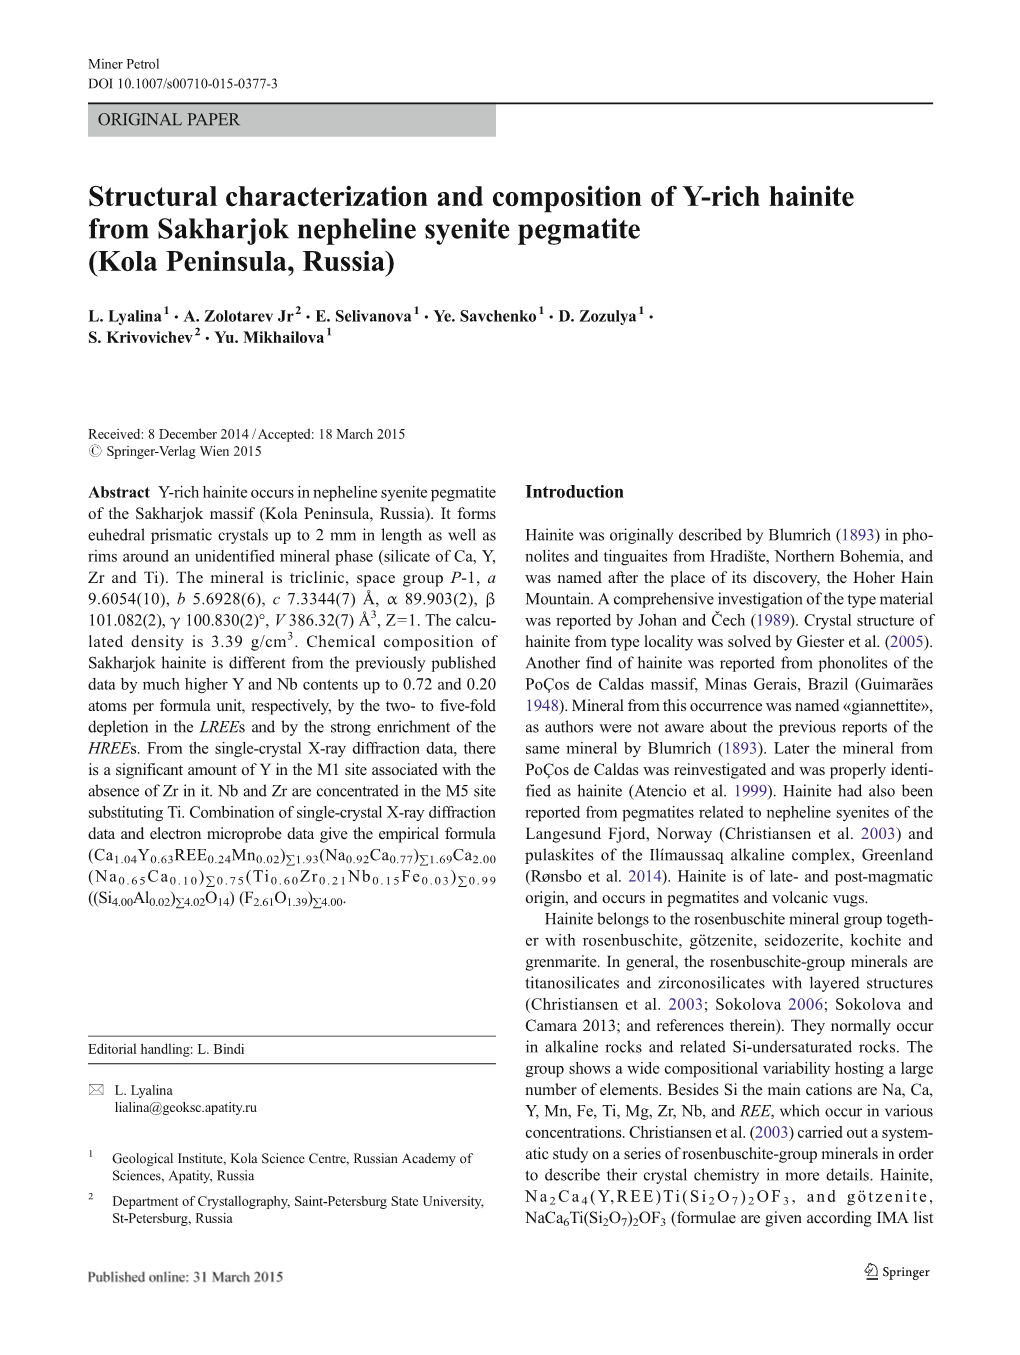 Structural Characterization and Composition of Y-Rich Hainite from Sakharjok Nepheline Syenite Pegmatite (Kola Peninsula, Russia)